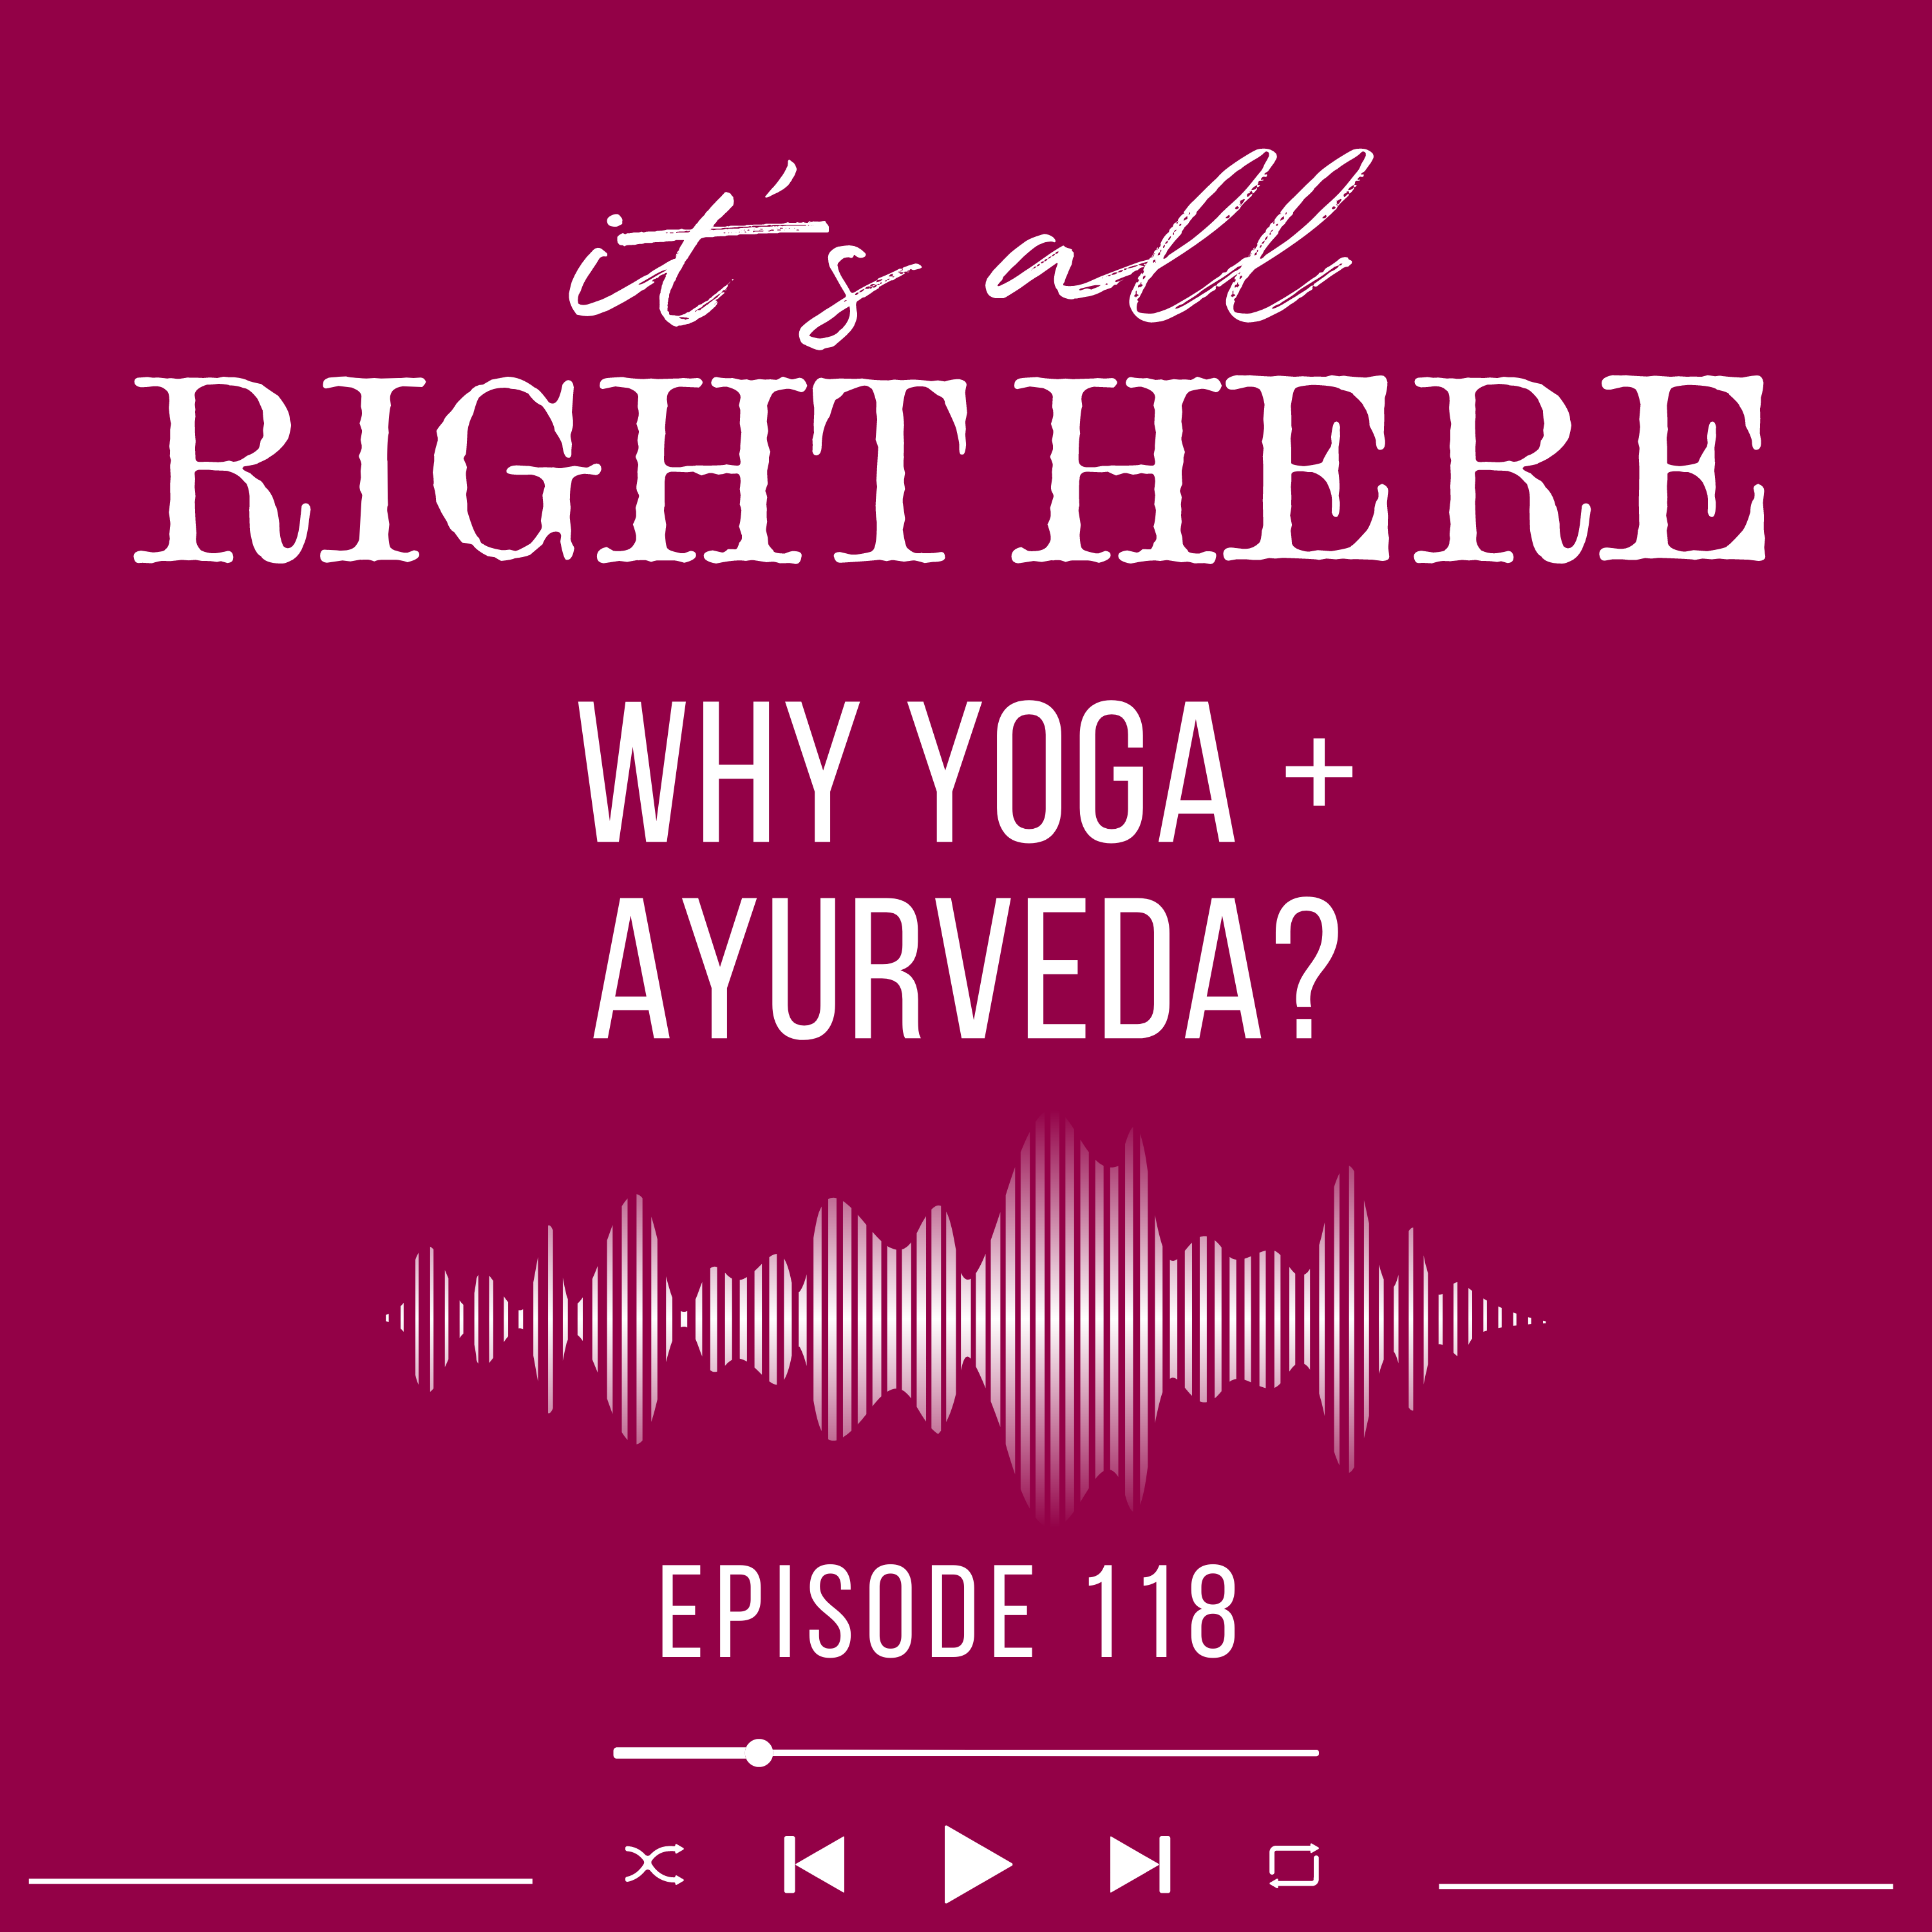 Why Yoga + Ayurveda?